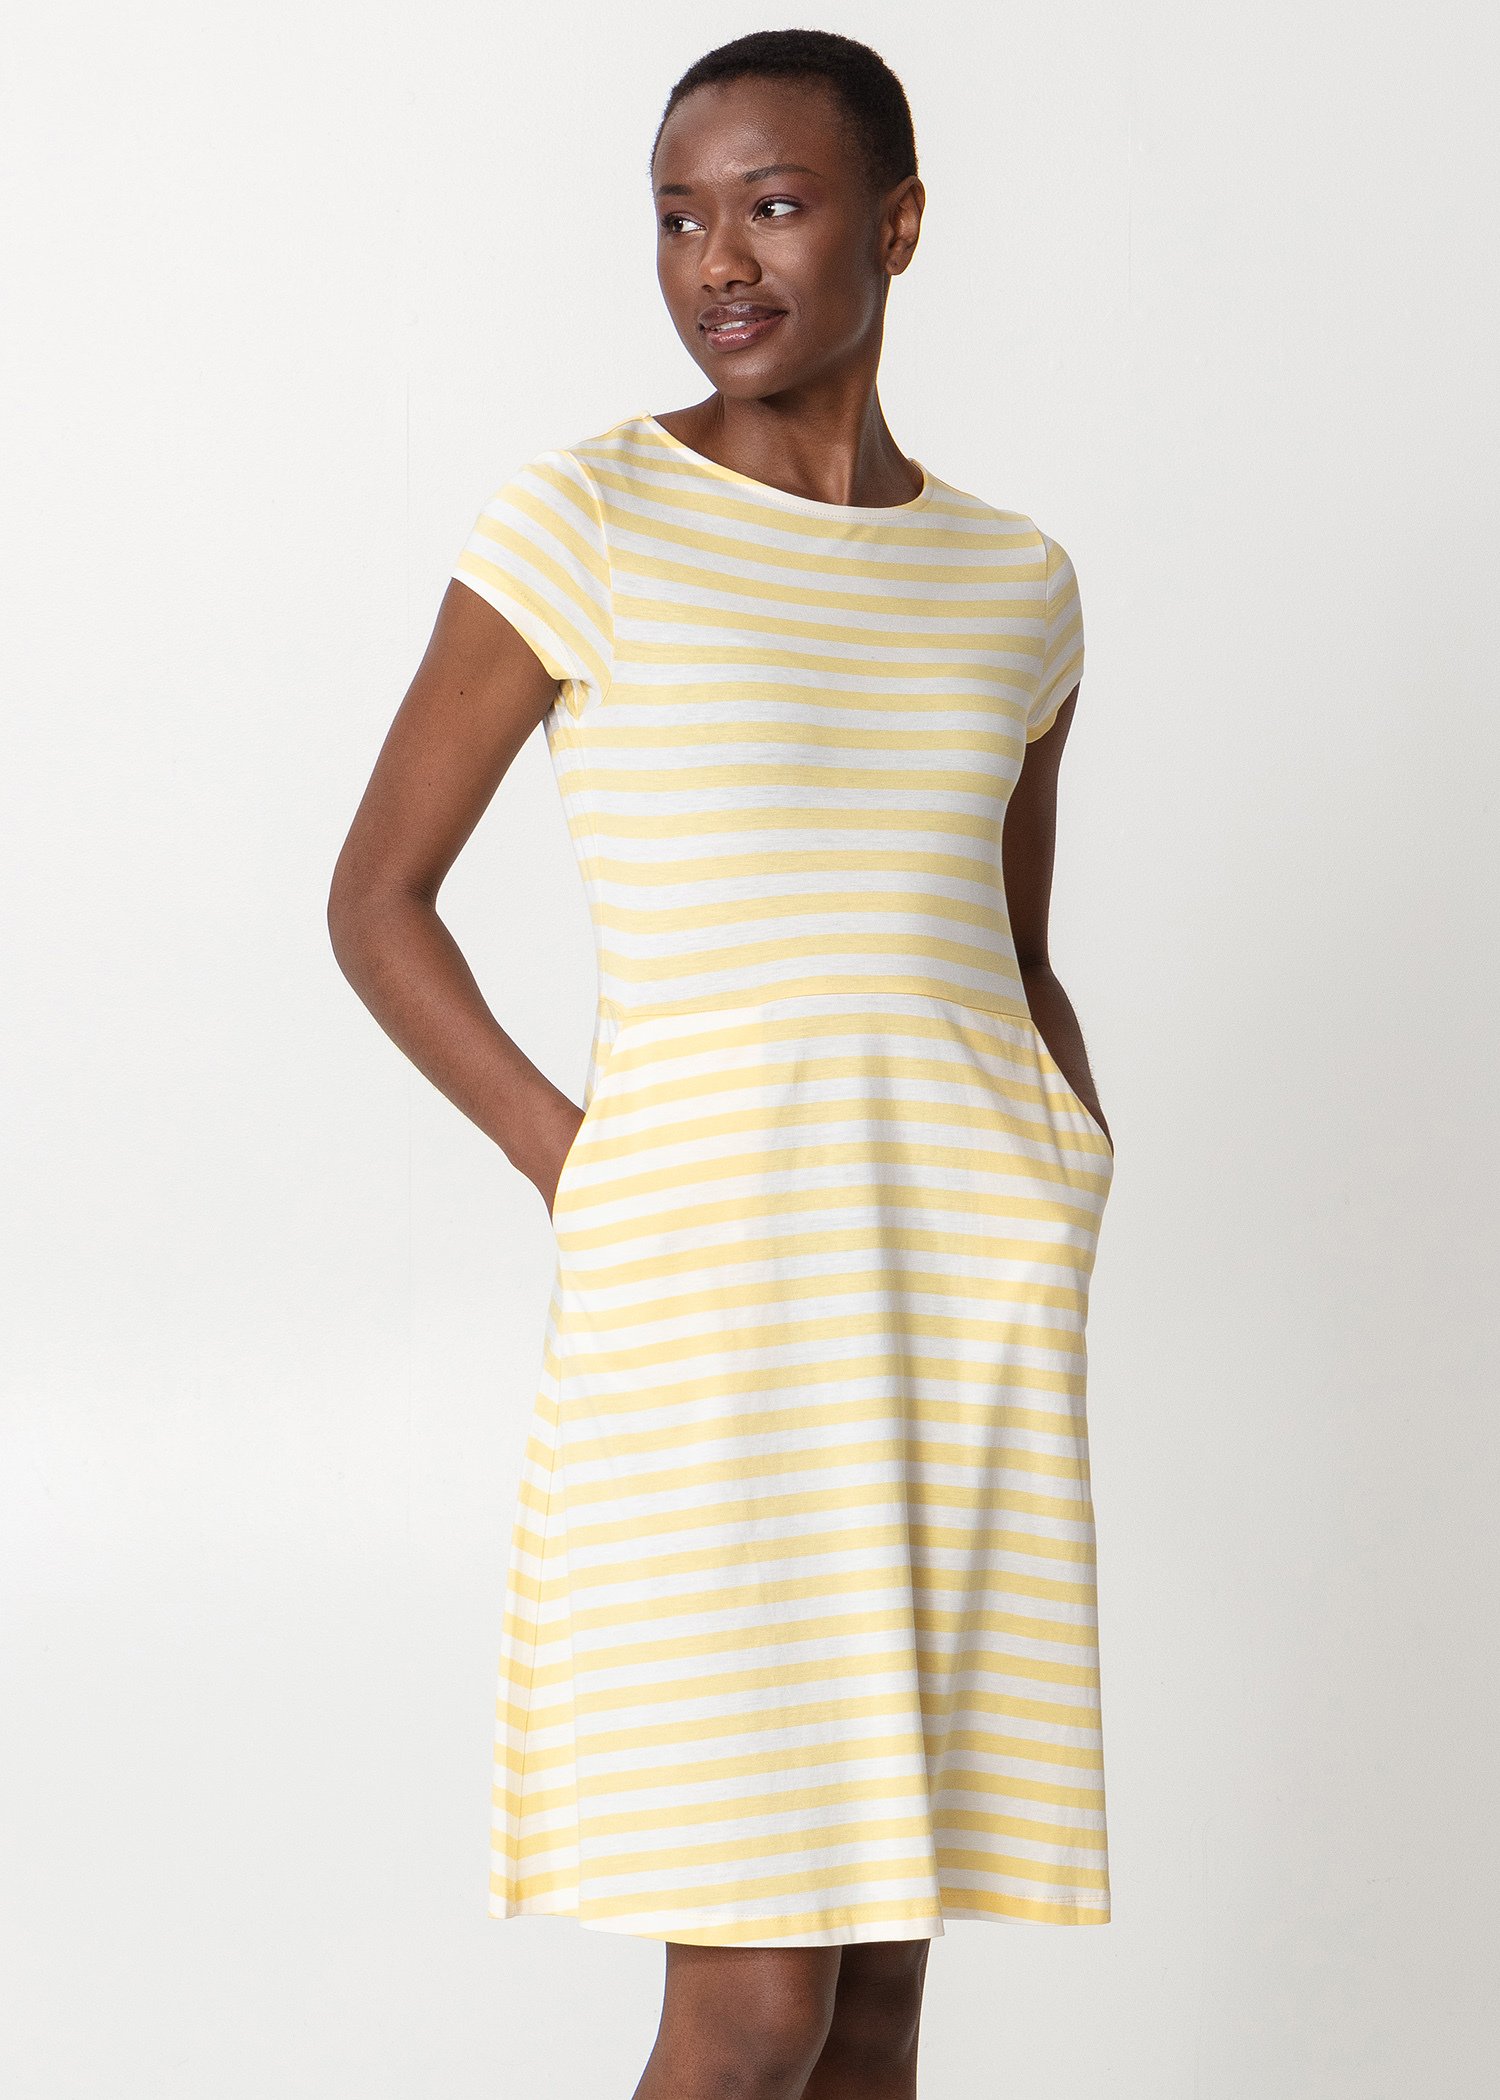 Striped dress with pockets